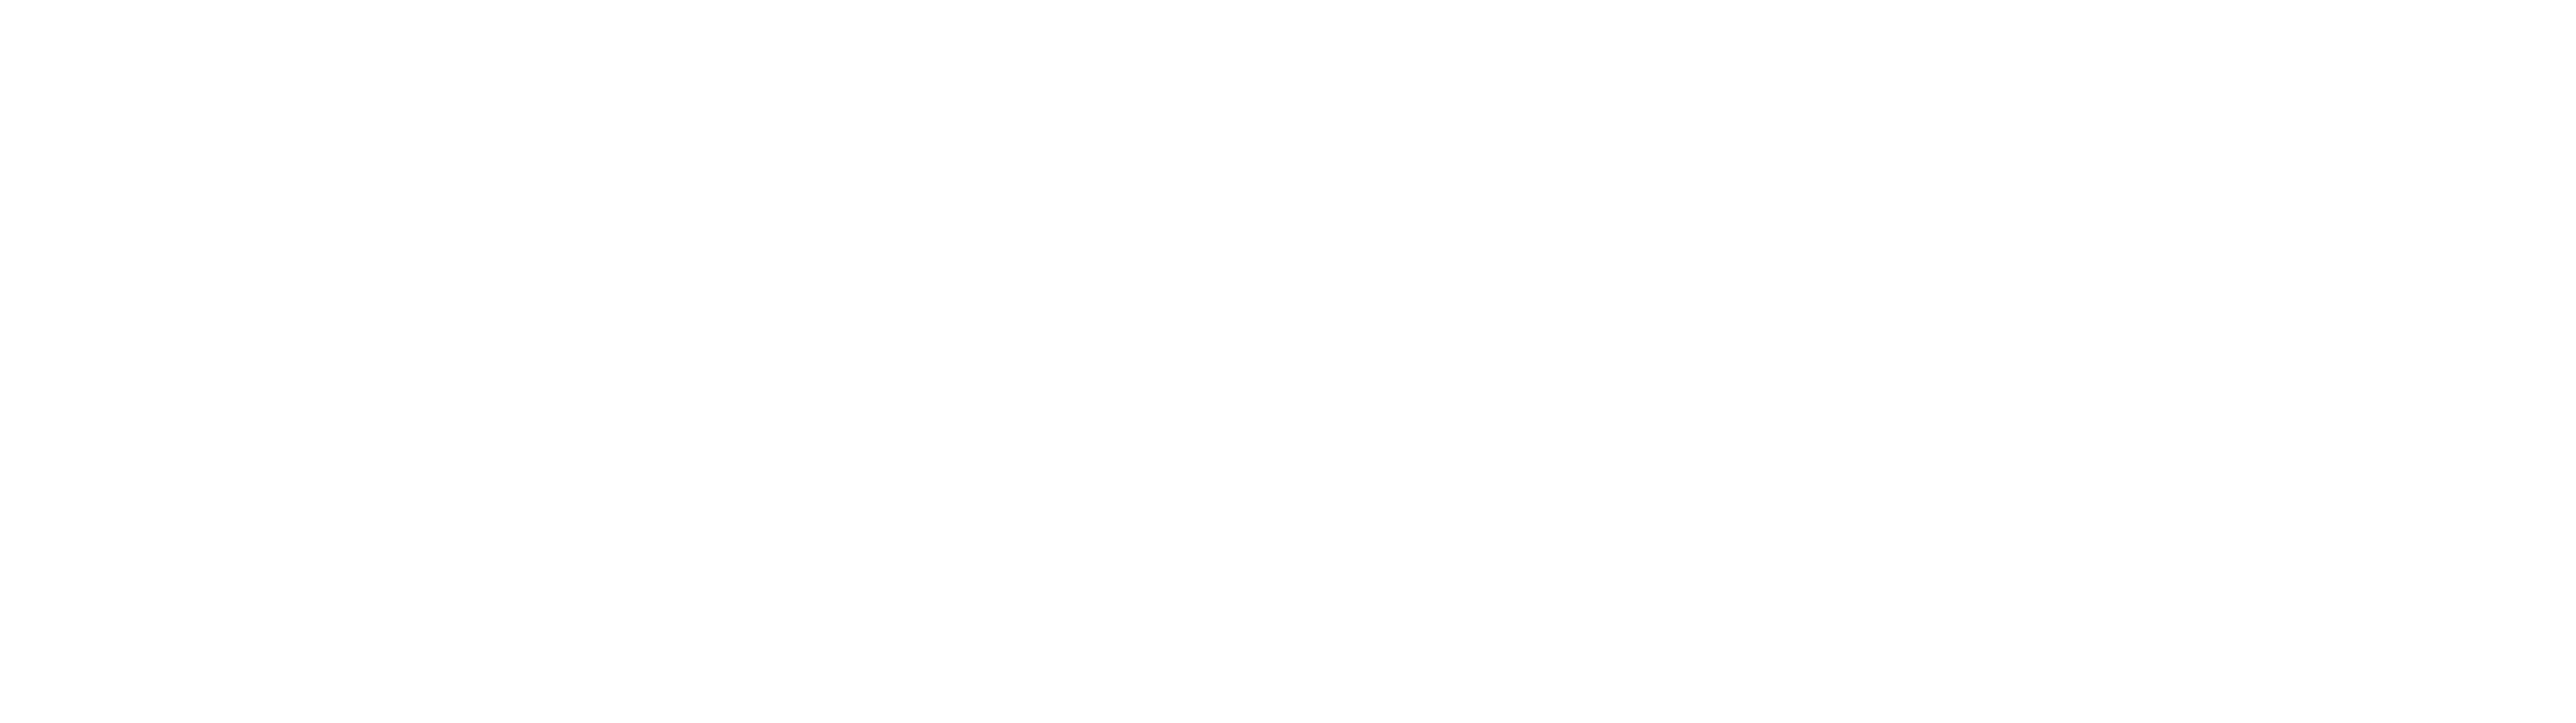 habitat for humanity restore ad